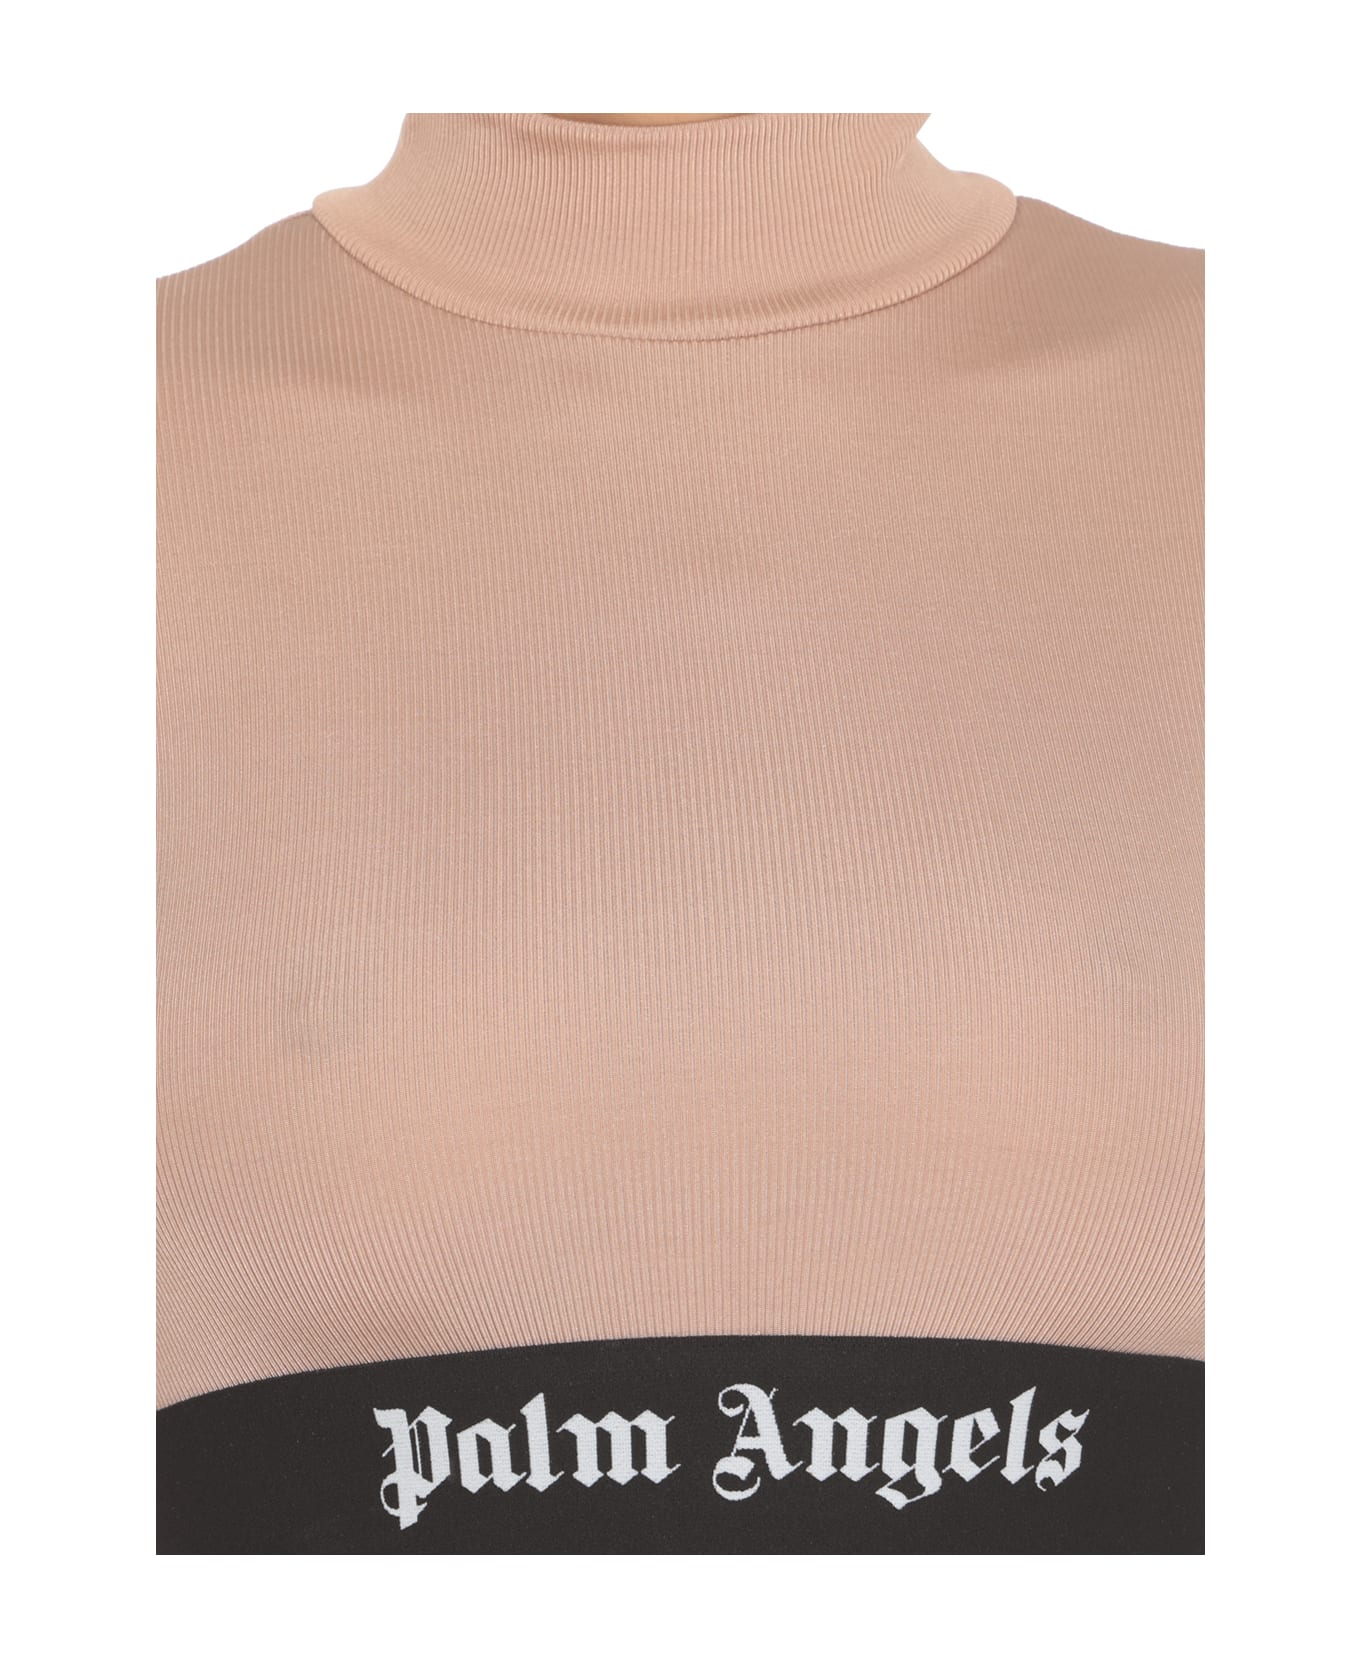 Palm Angels Top - Beige ニットウェア